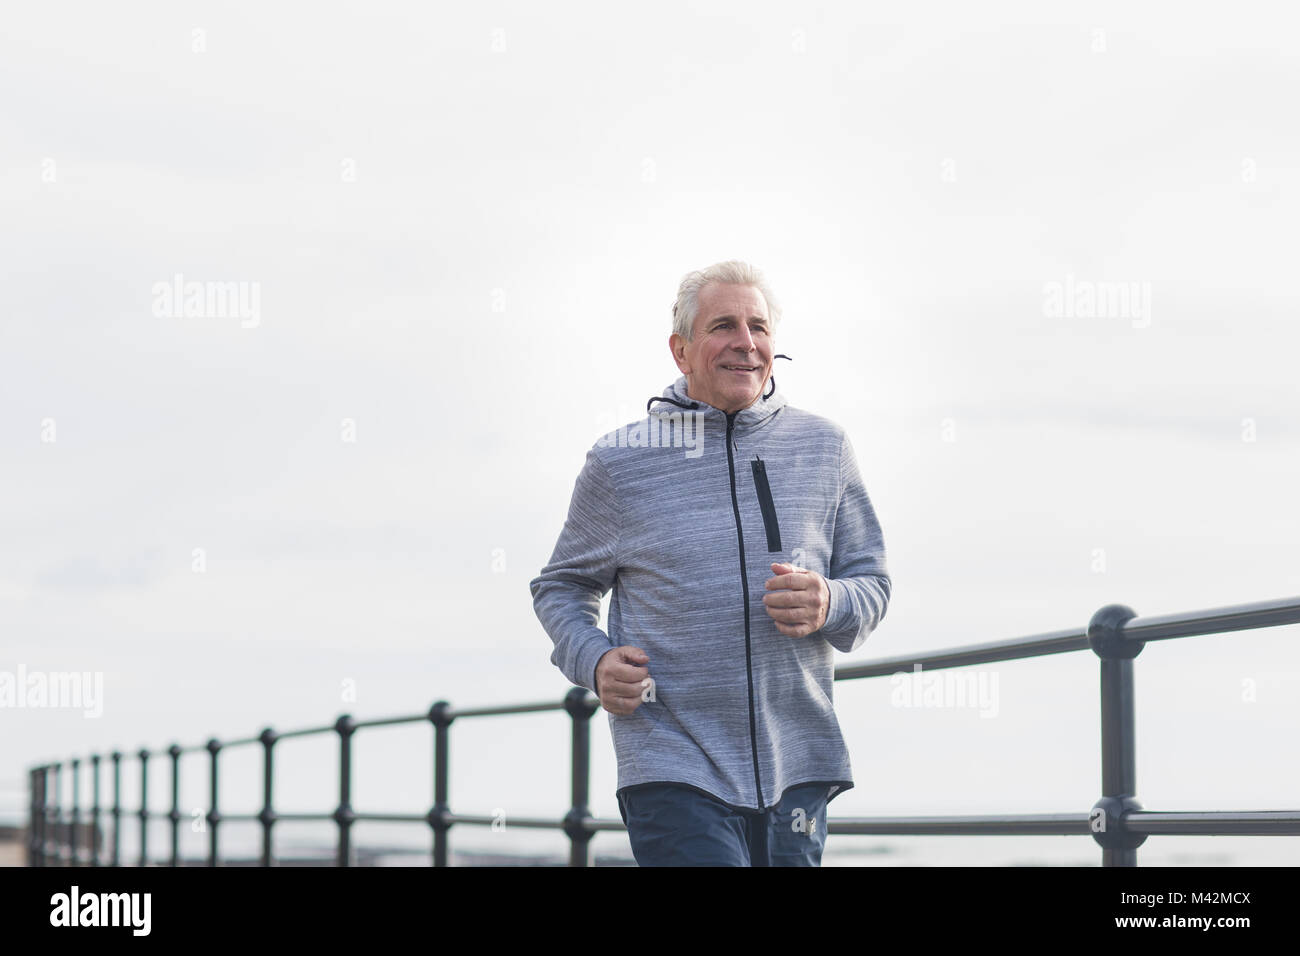 Senior man jogging outdoors Banque D'Images